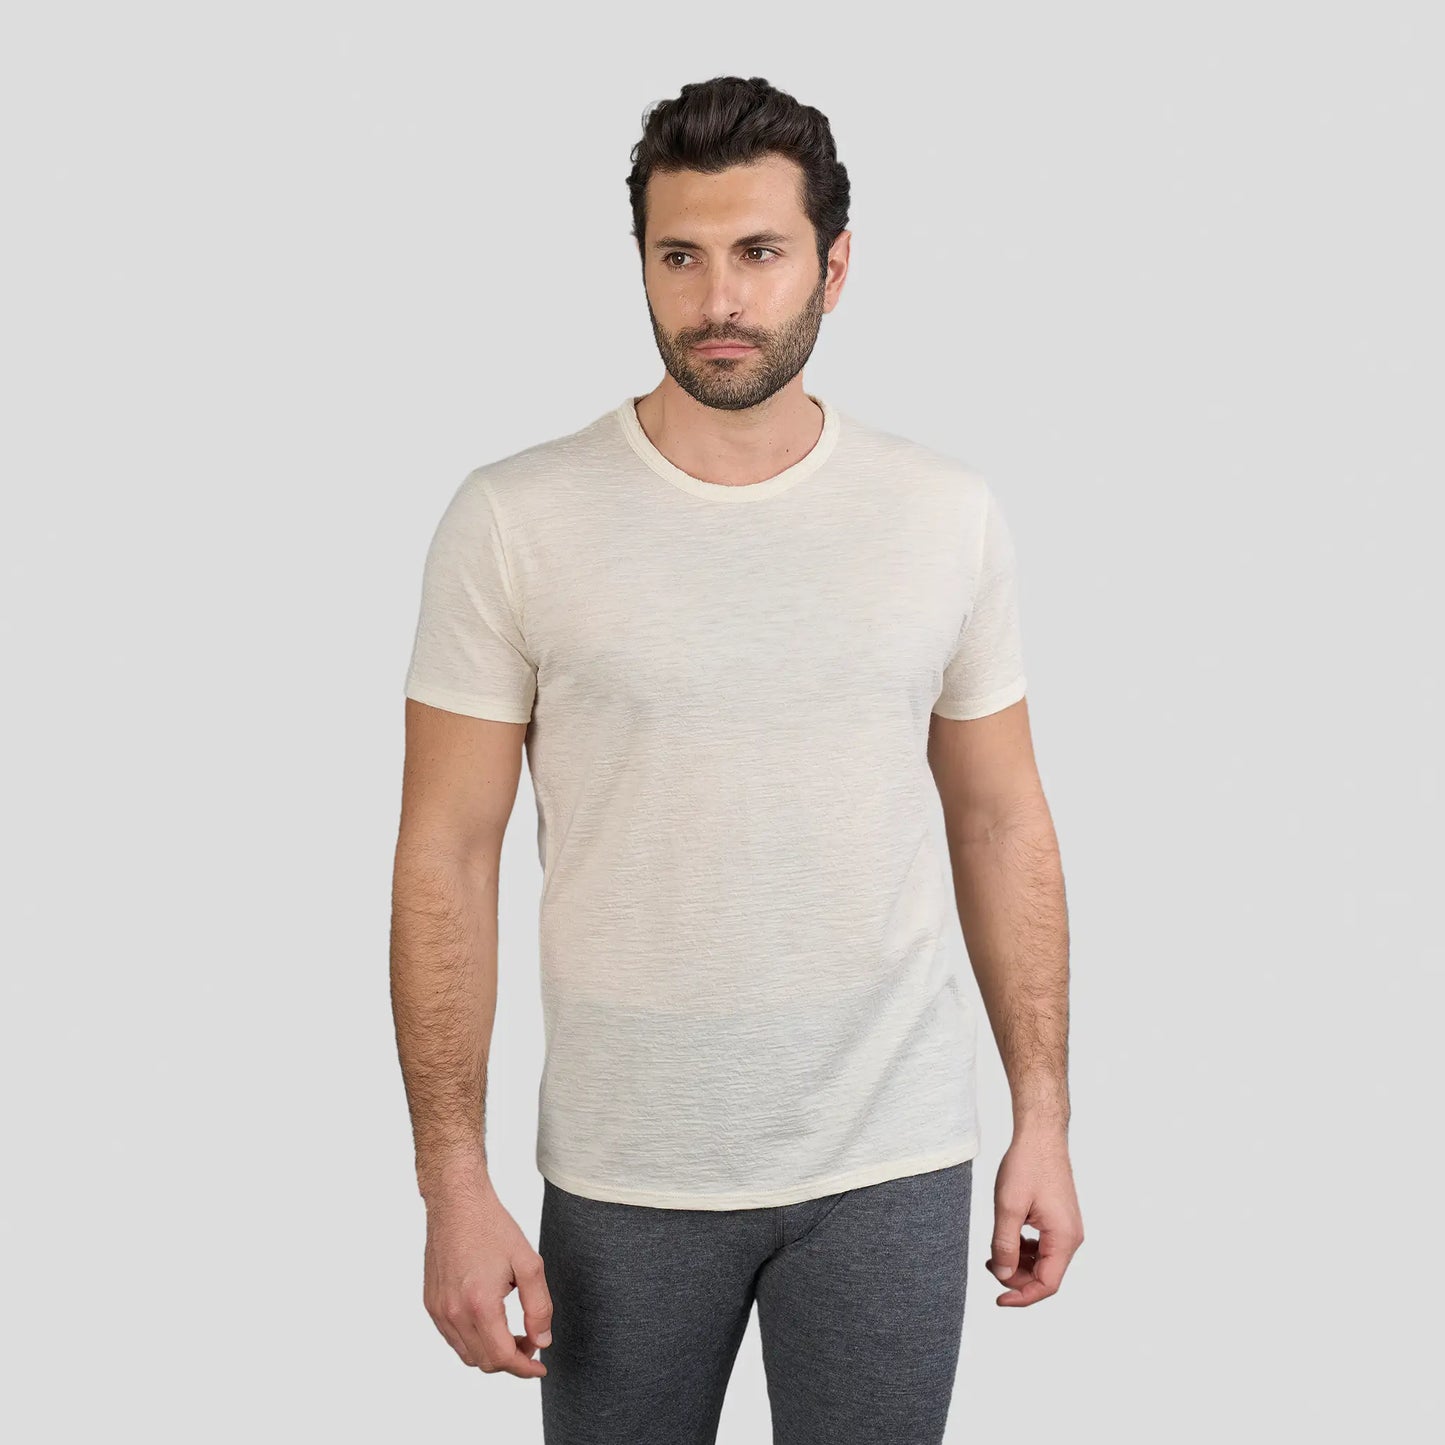 mens versatile design crew neck tshirt color natural white